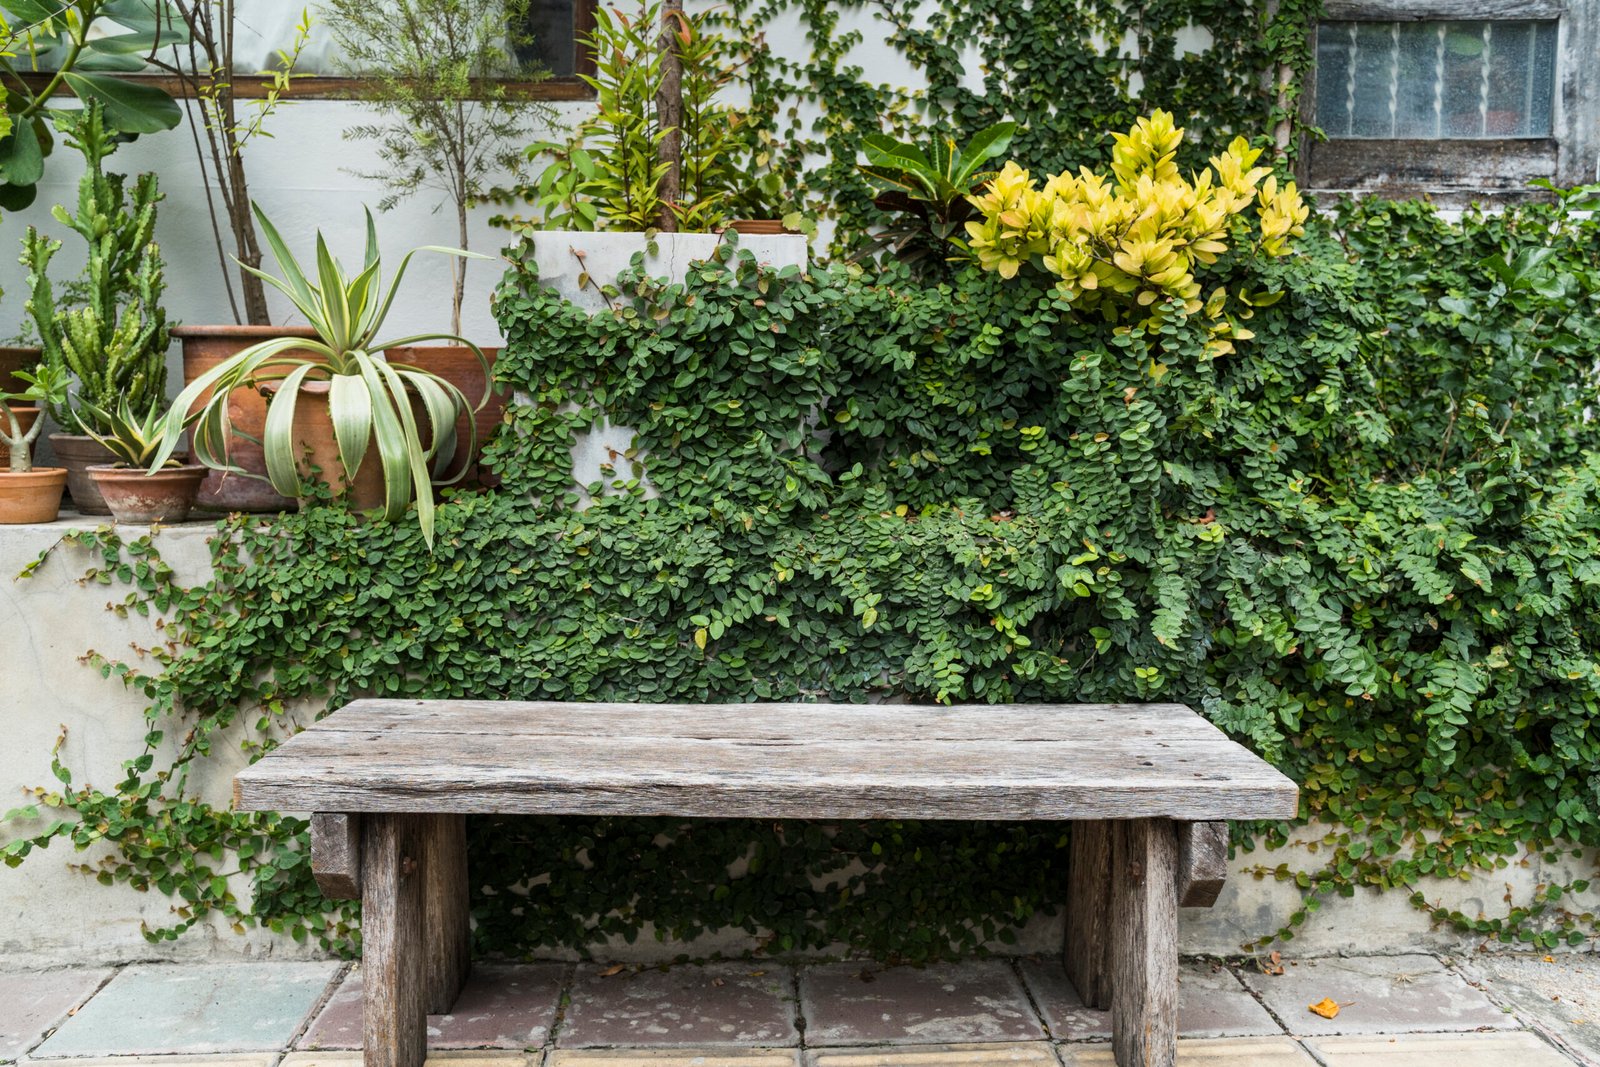 Wooden bench in a beautiful garden.